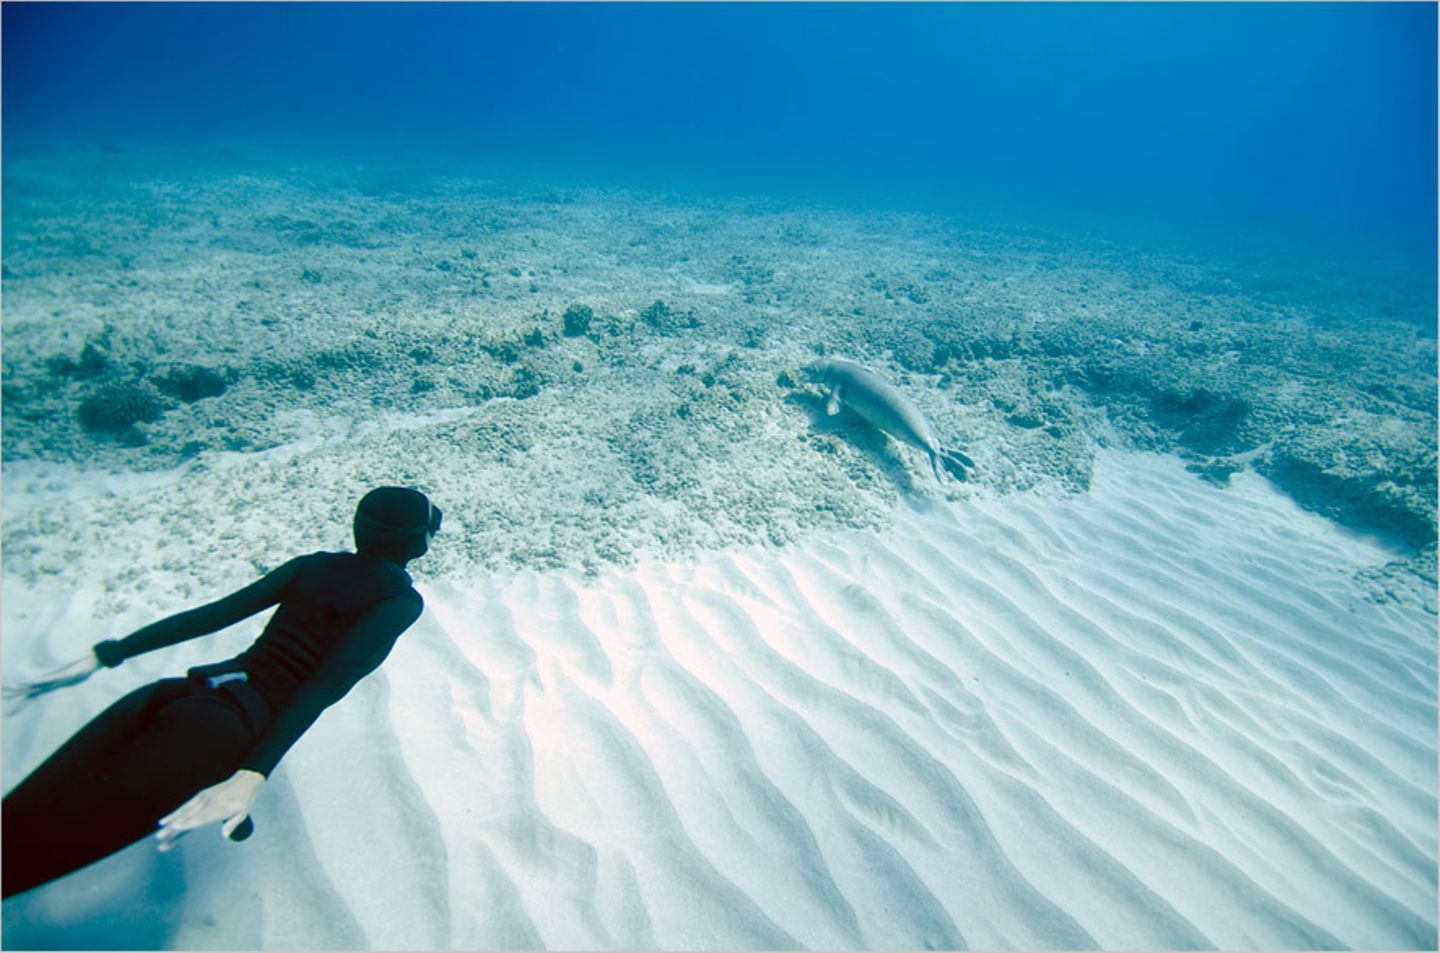 Apnoe-Tauchen: "Freediven fördert die mentale Stärke" - Bild 9